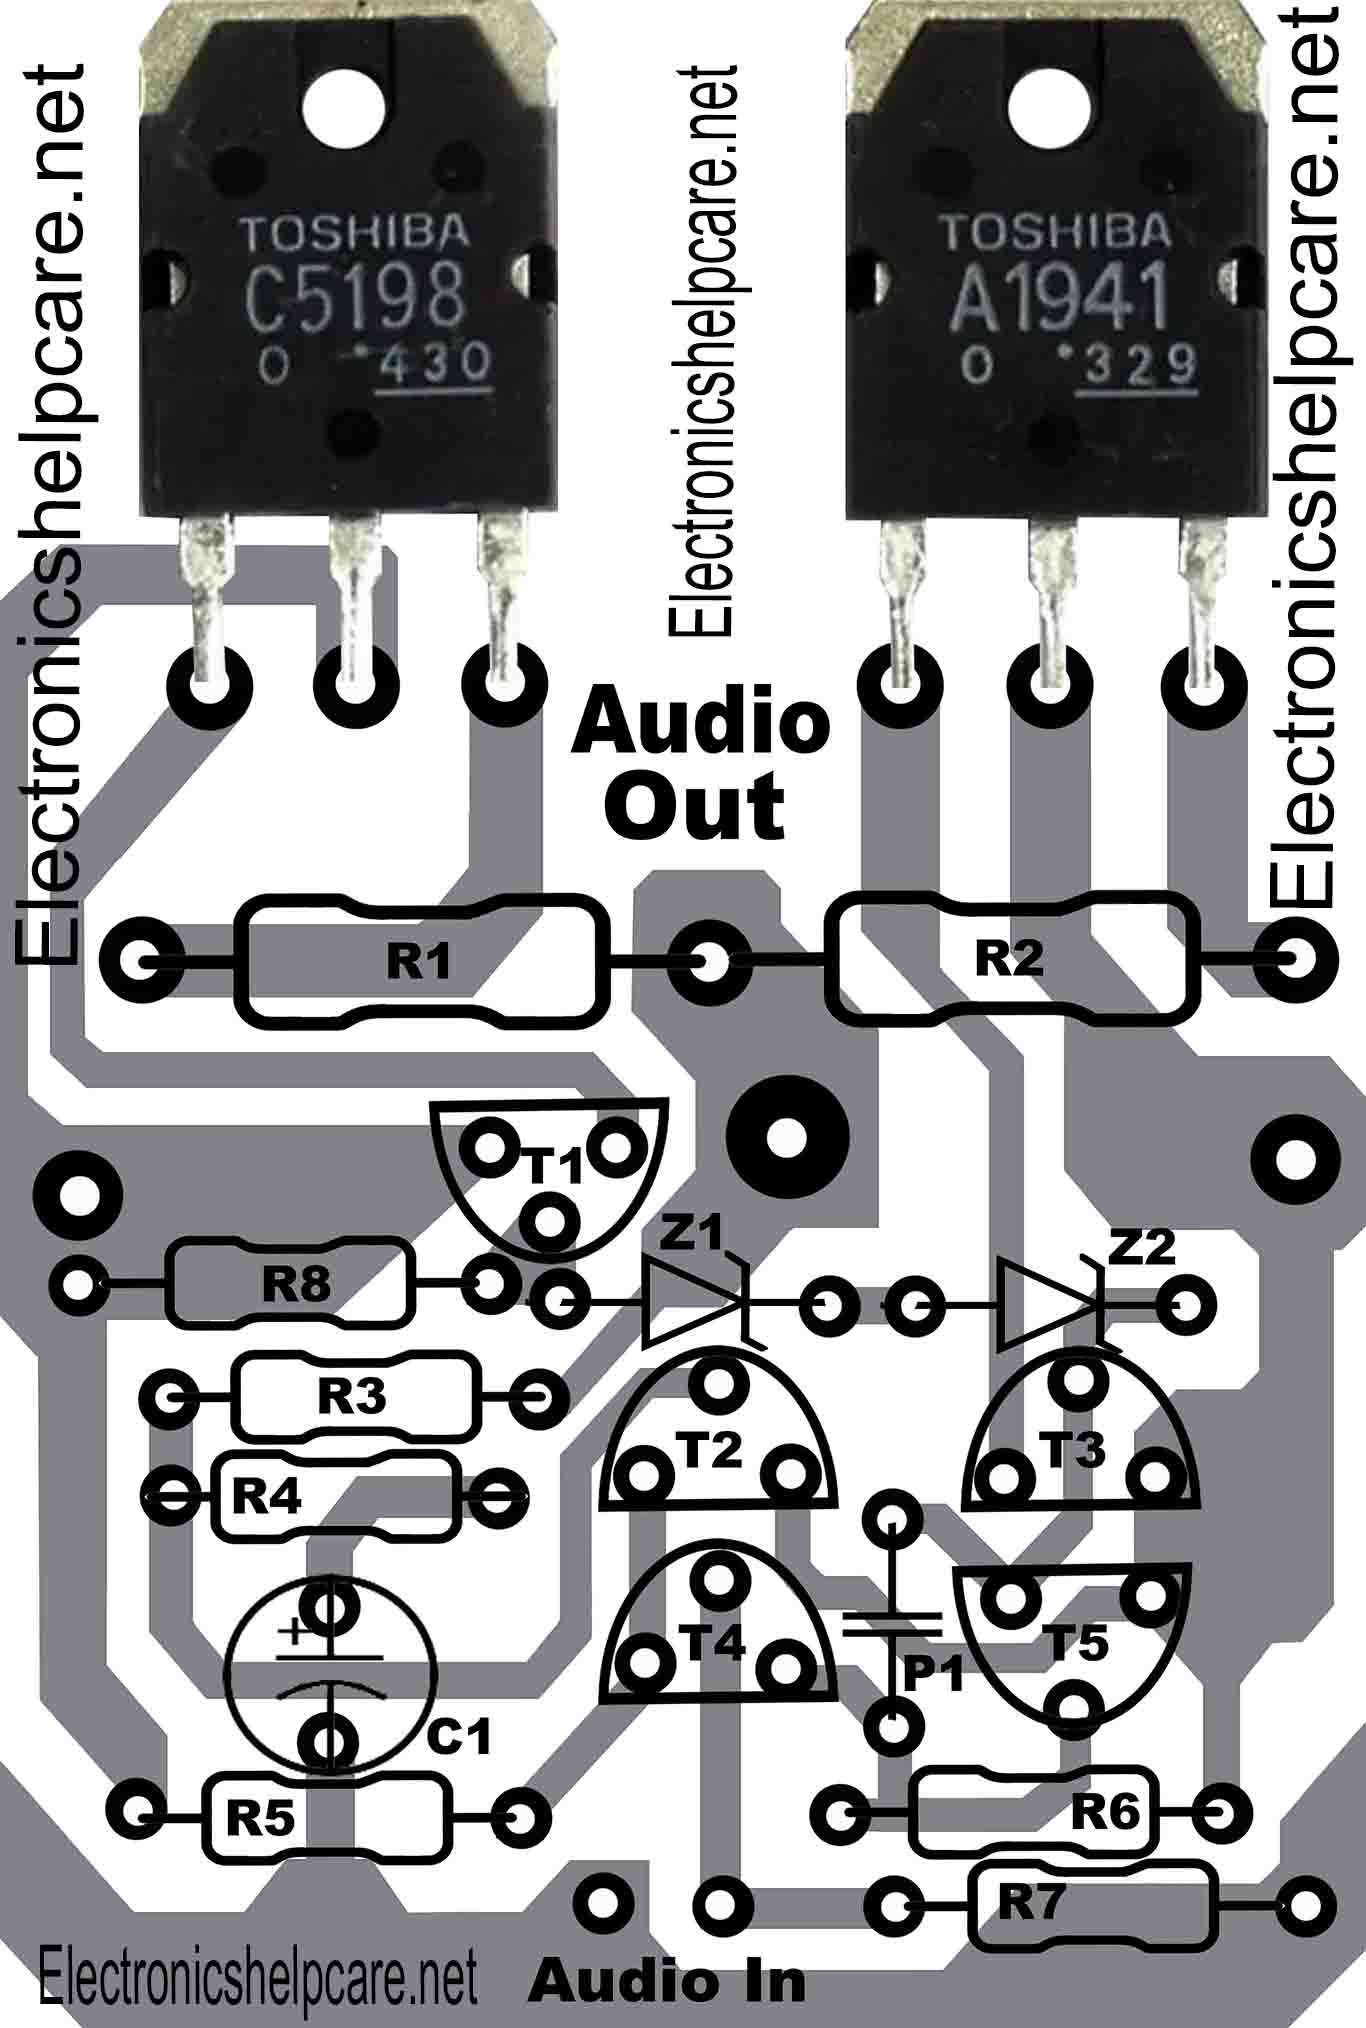 Amplifier circuit using 2sc5198 and 2sa1941